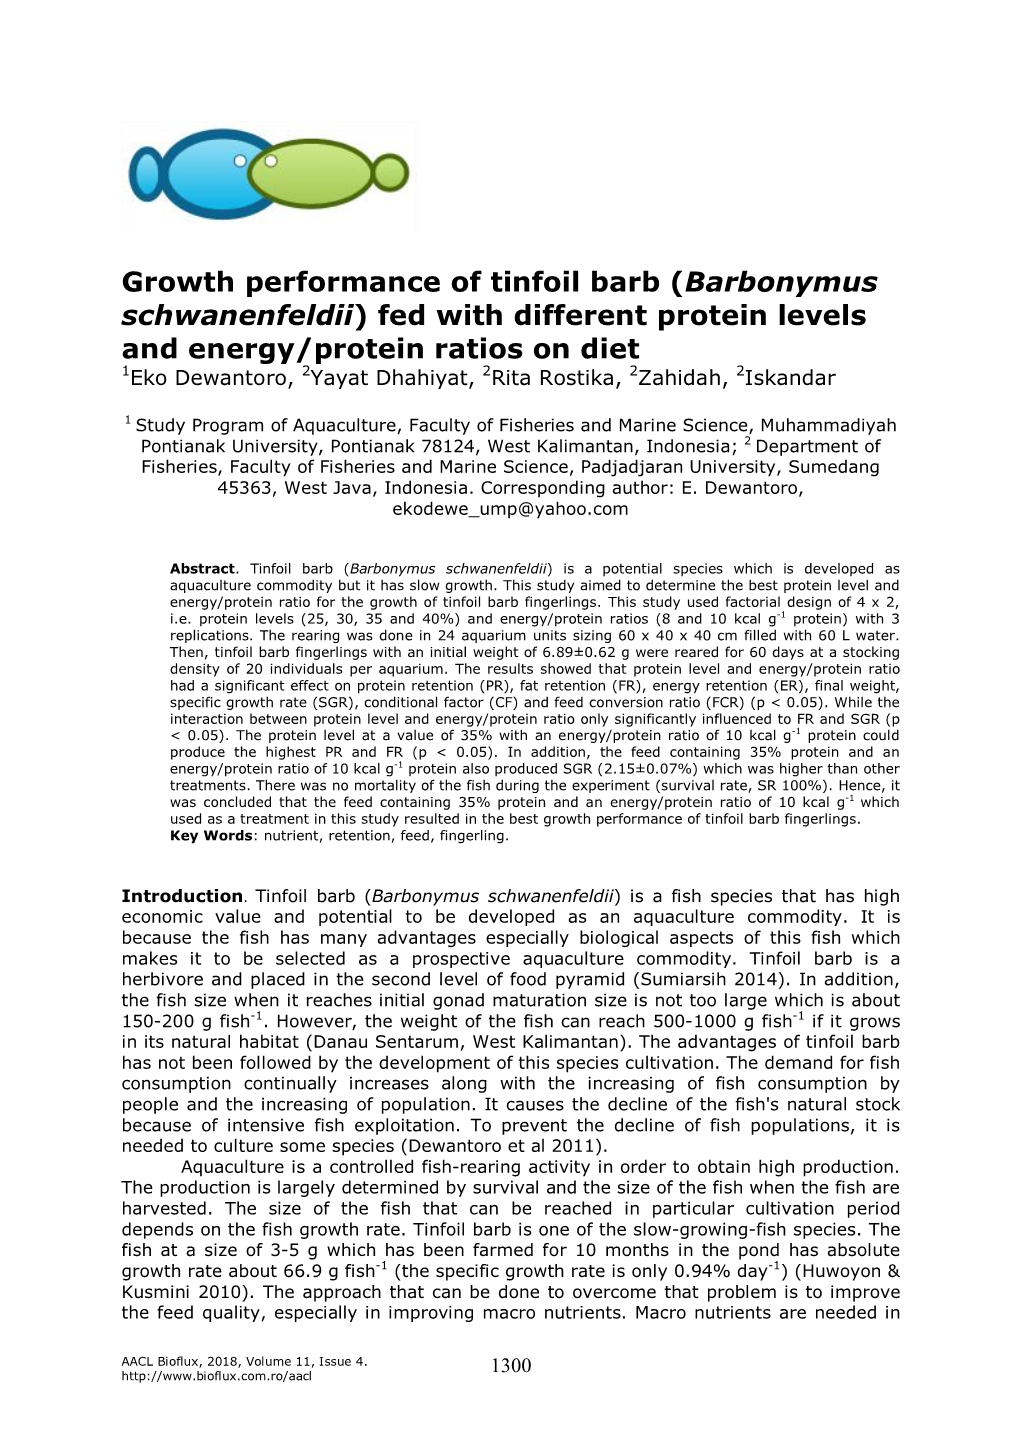 Growth Performance of Tinfoil Barb (Barbonymus Schwanenfeldii) Fed